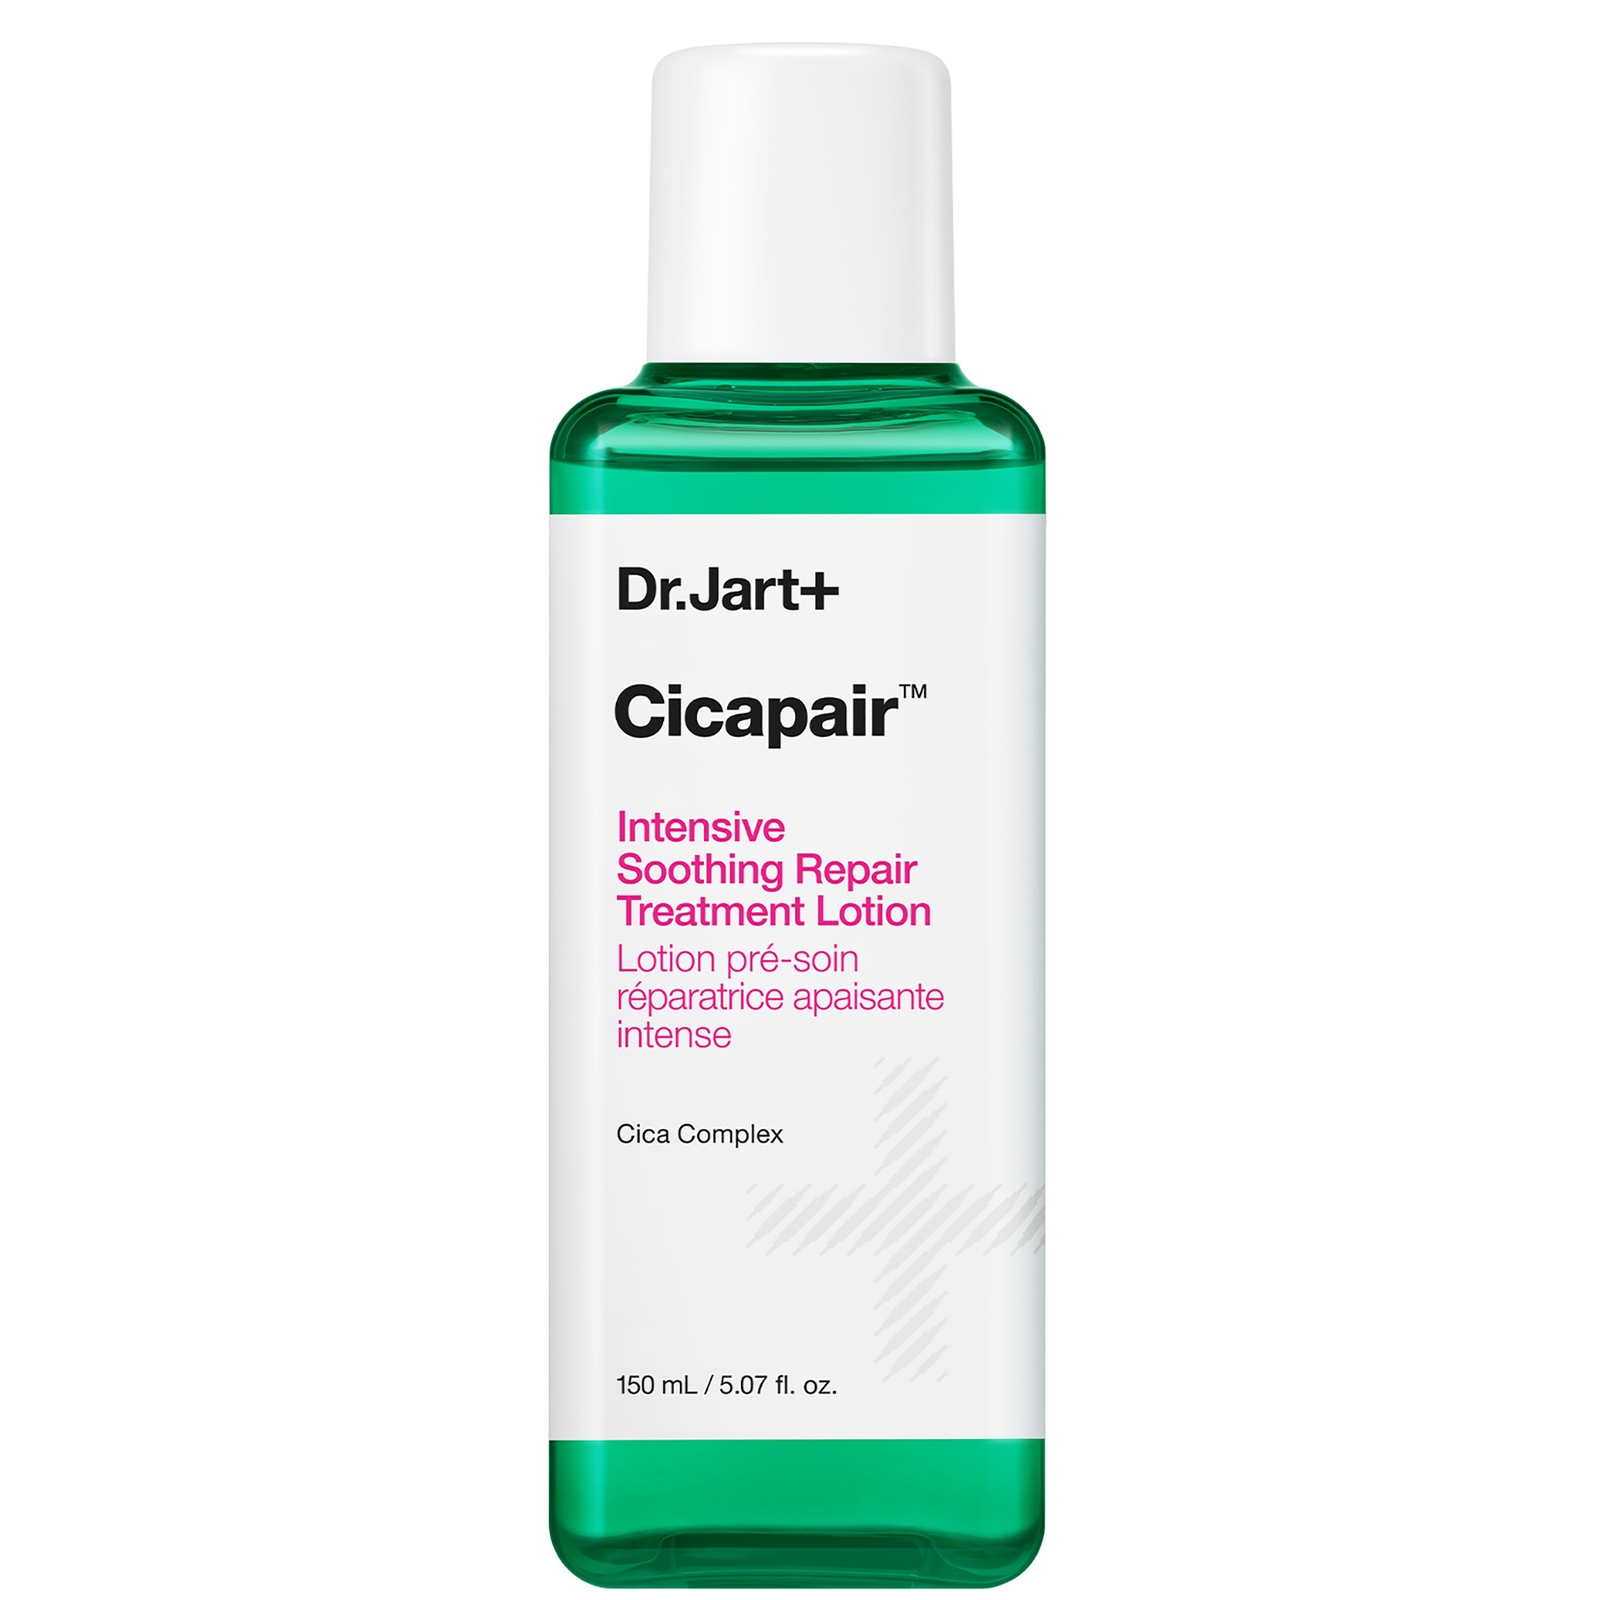 Dr.Jart+ Cicapair Intensive Soothing Repair Treatment Lotion 150ml